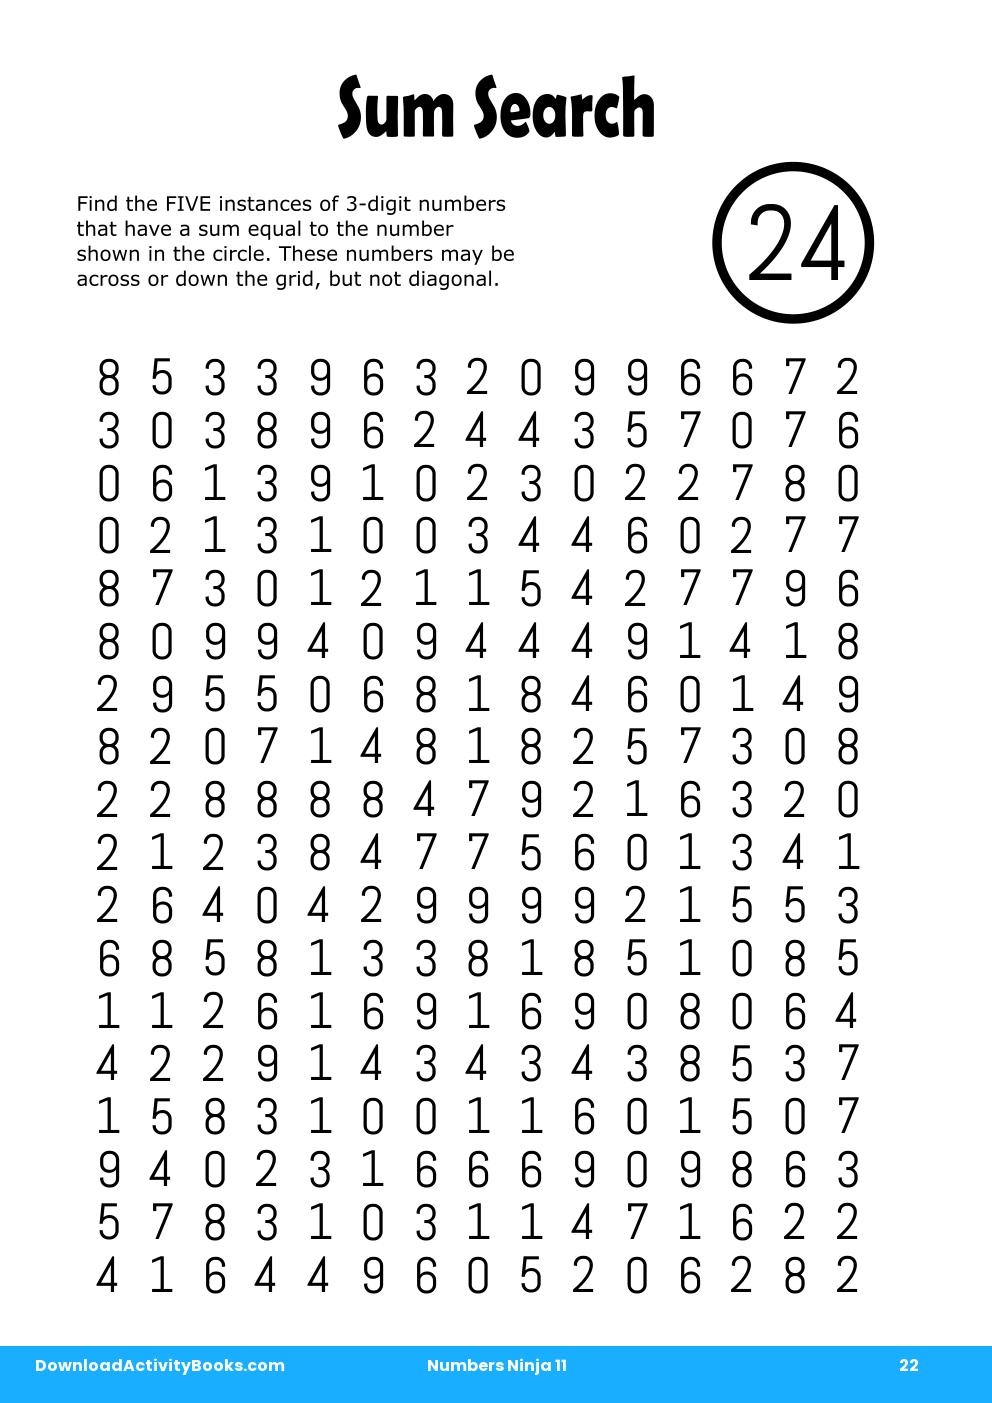 Sum Search in Numbers Ninja 11